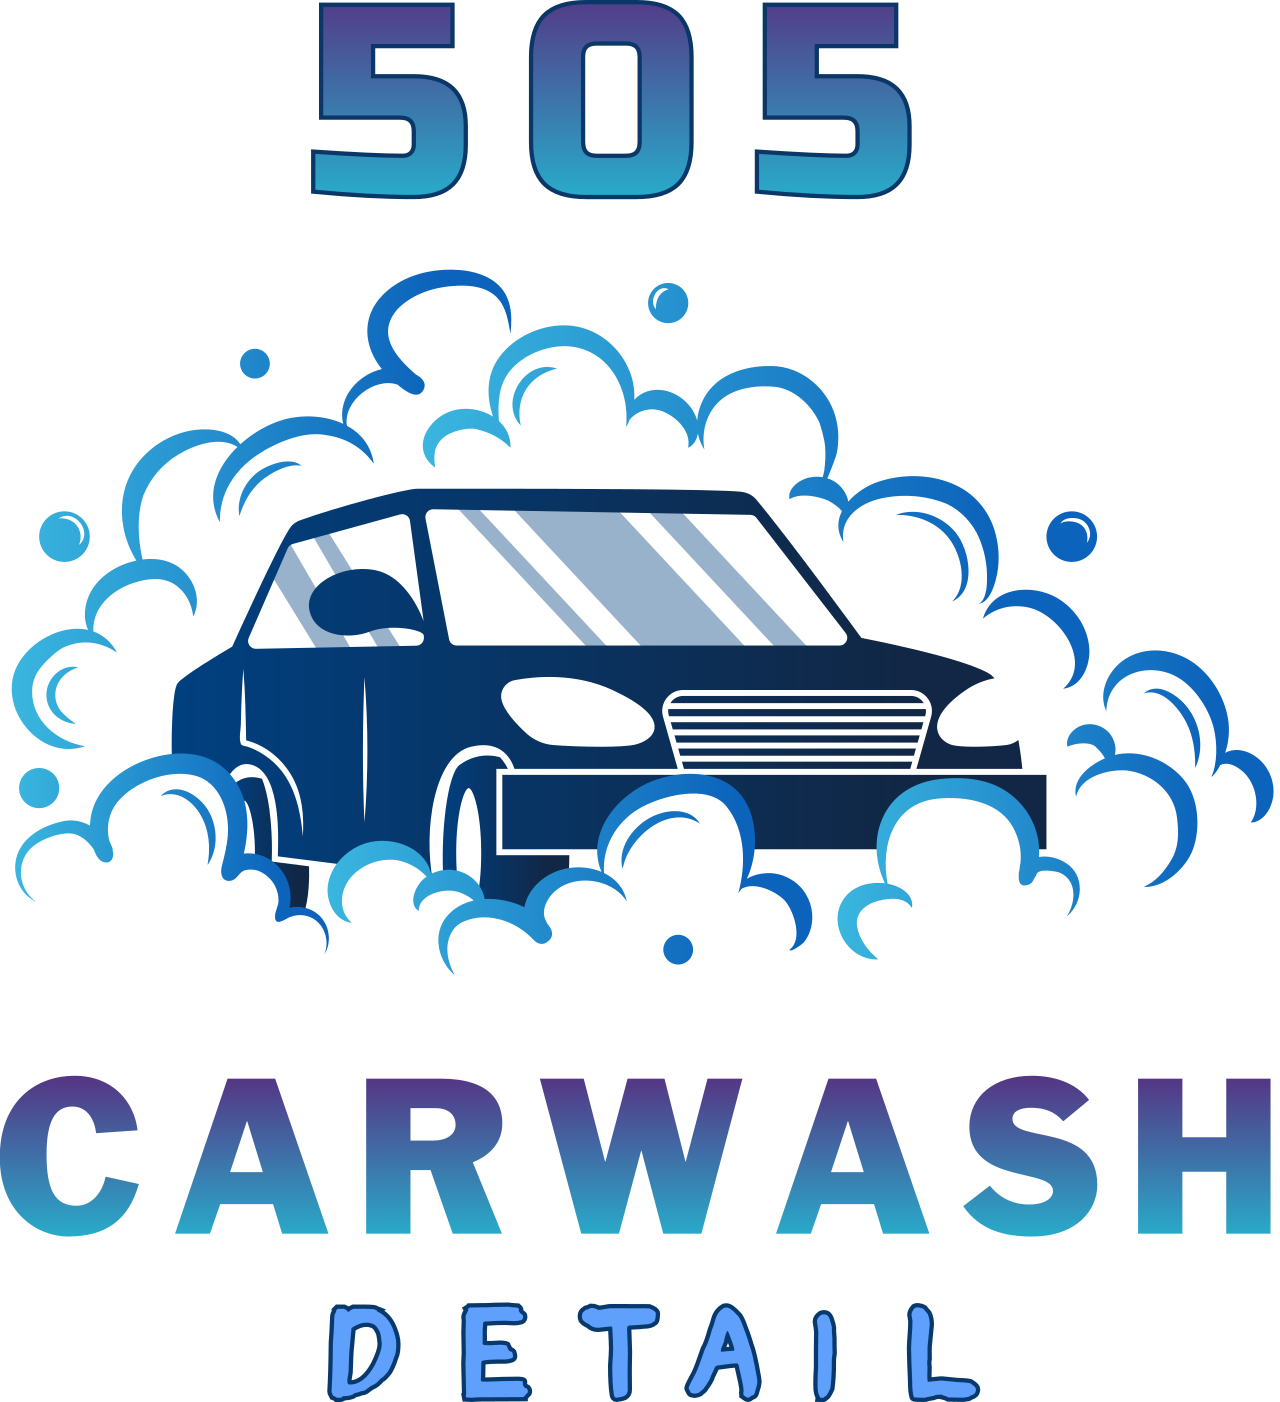 505 carwash 's web page